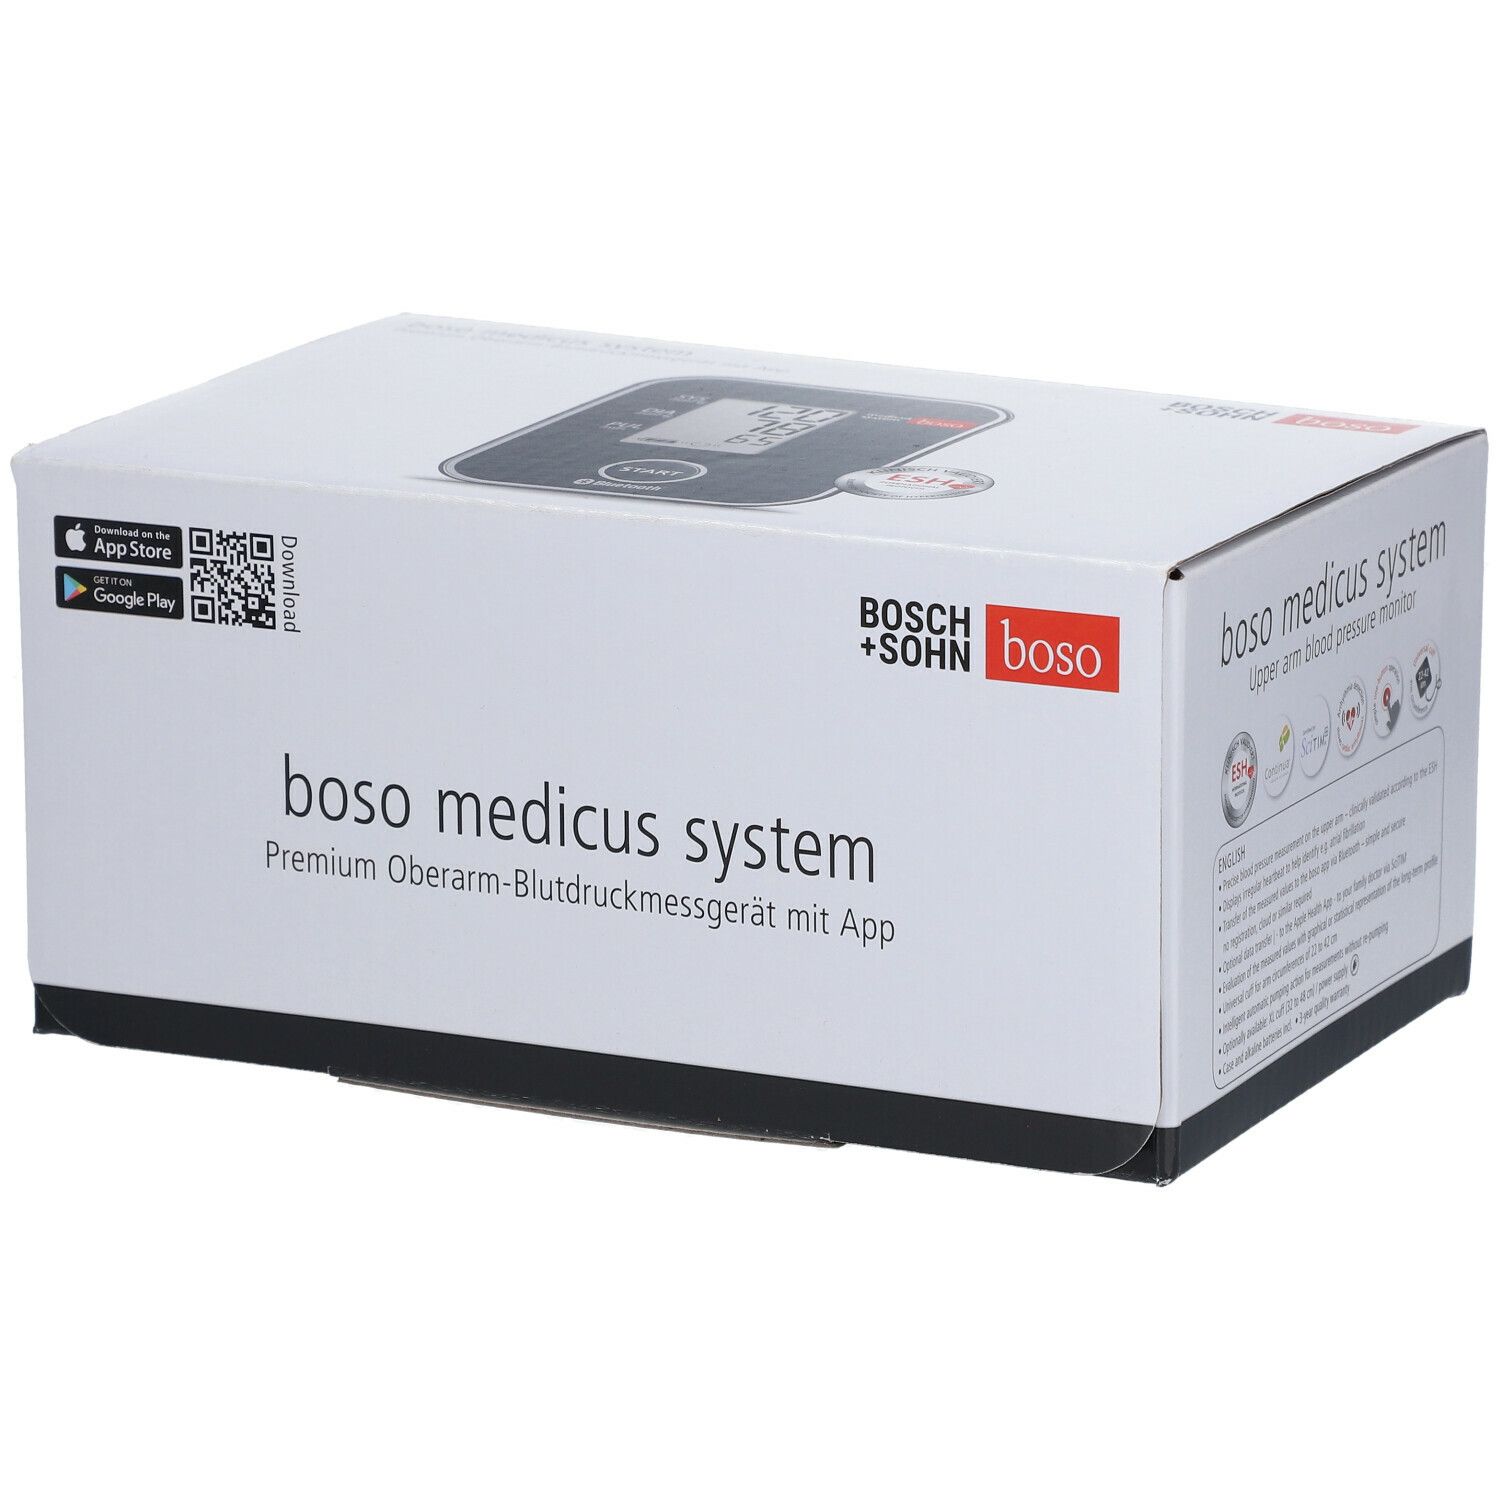 boso medicus system